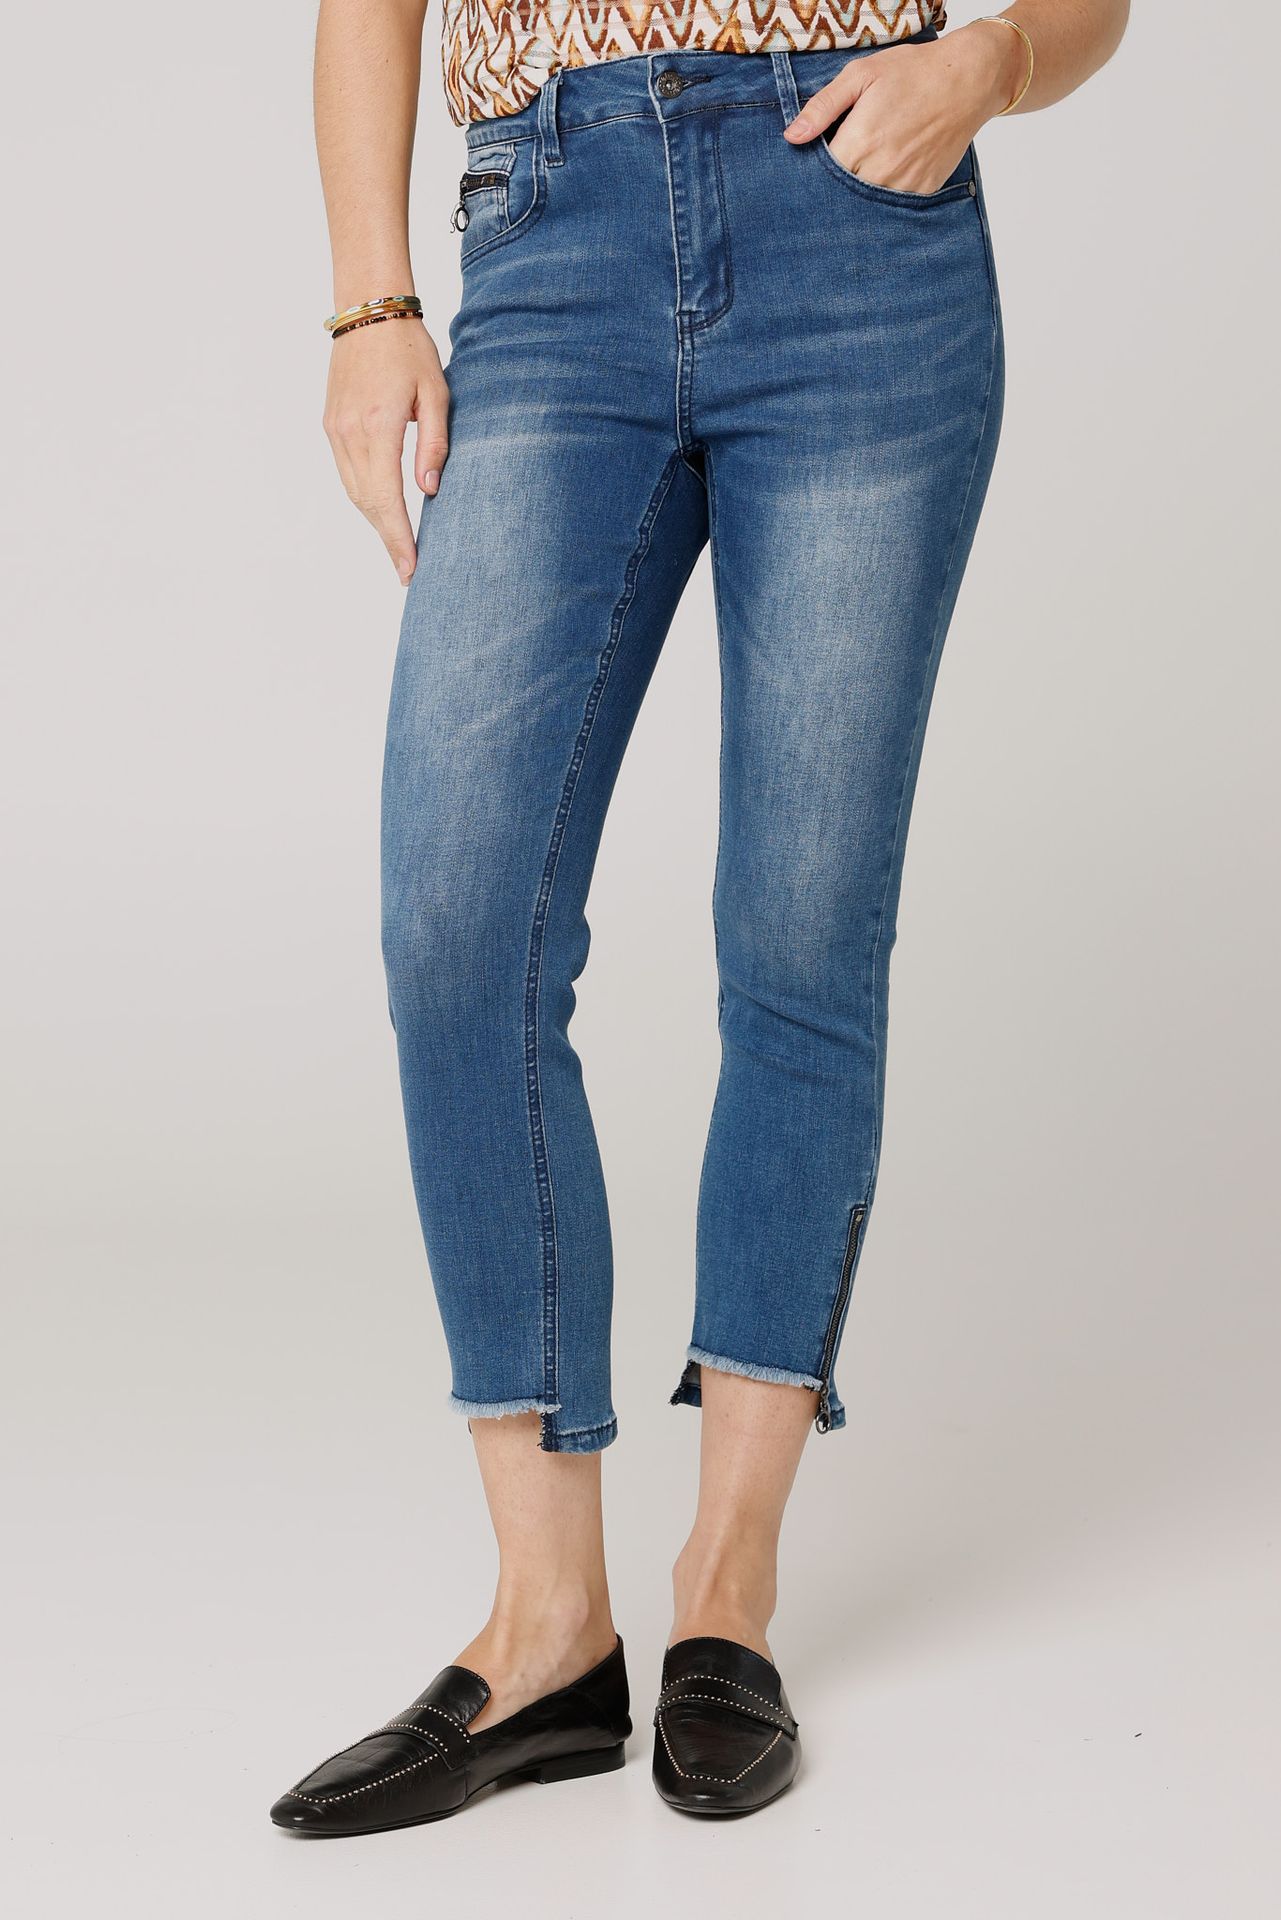 Norah Denim jeans blue 210850-400